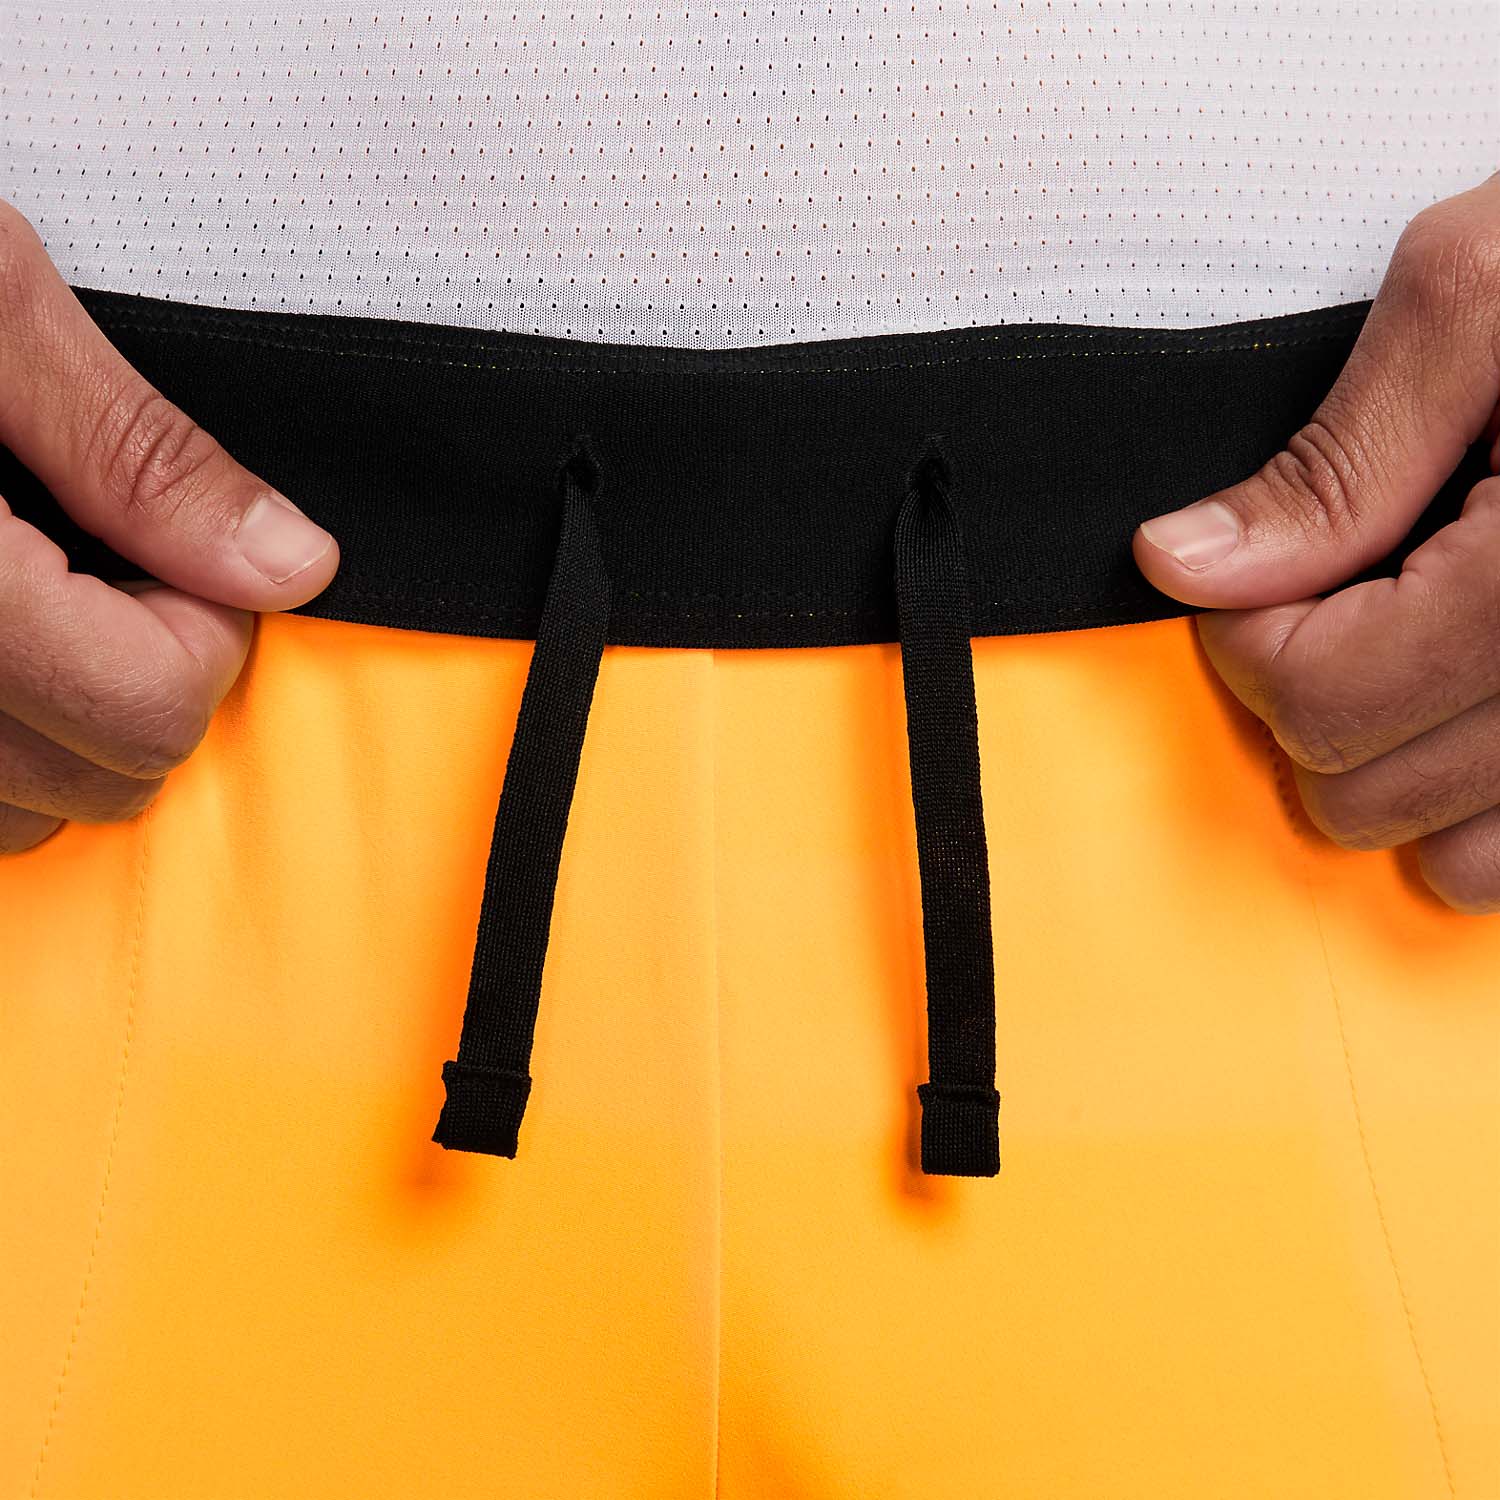 Nike Court Advantage 7in Pantaloncini - Laser Orange/Black